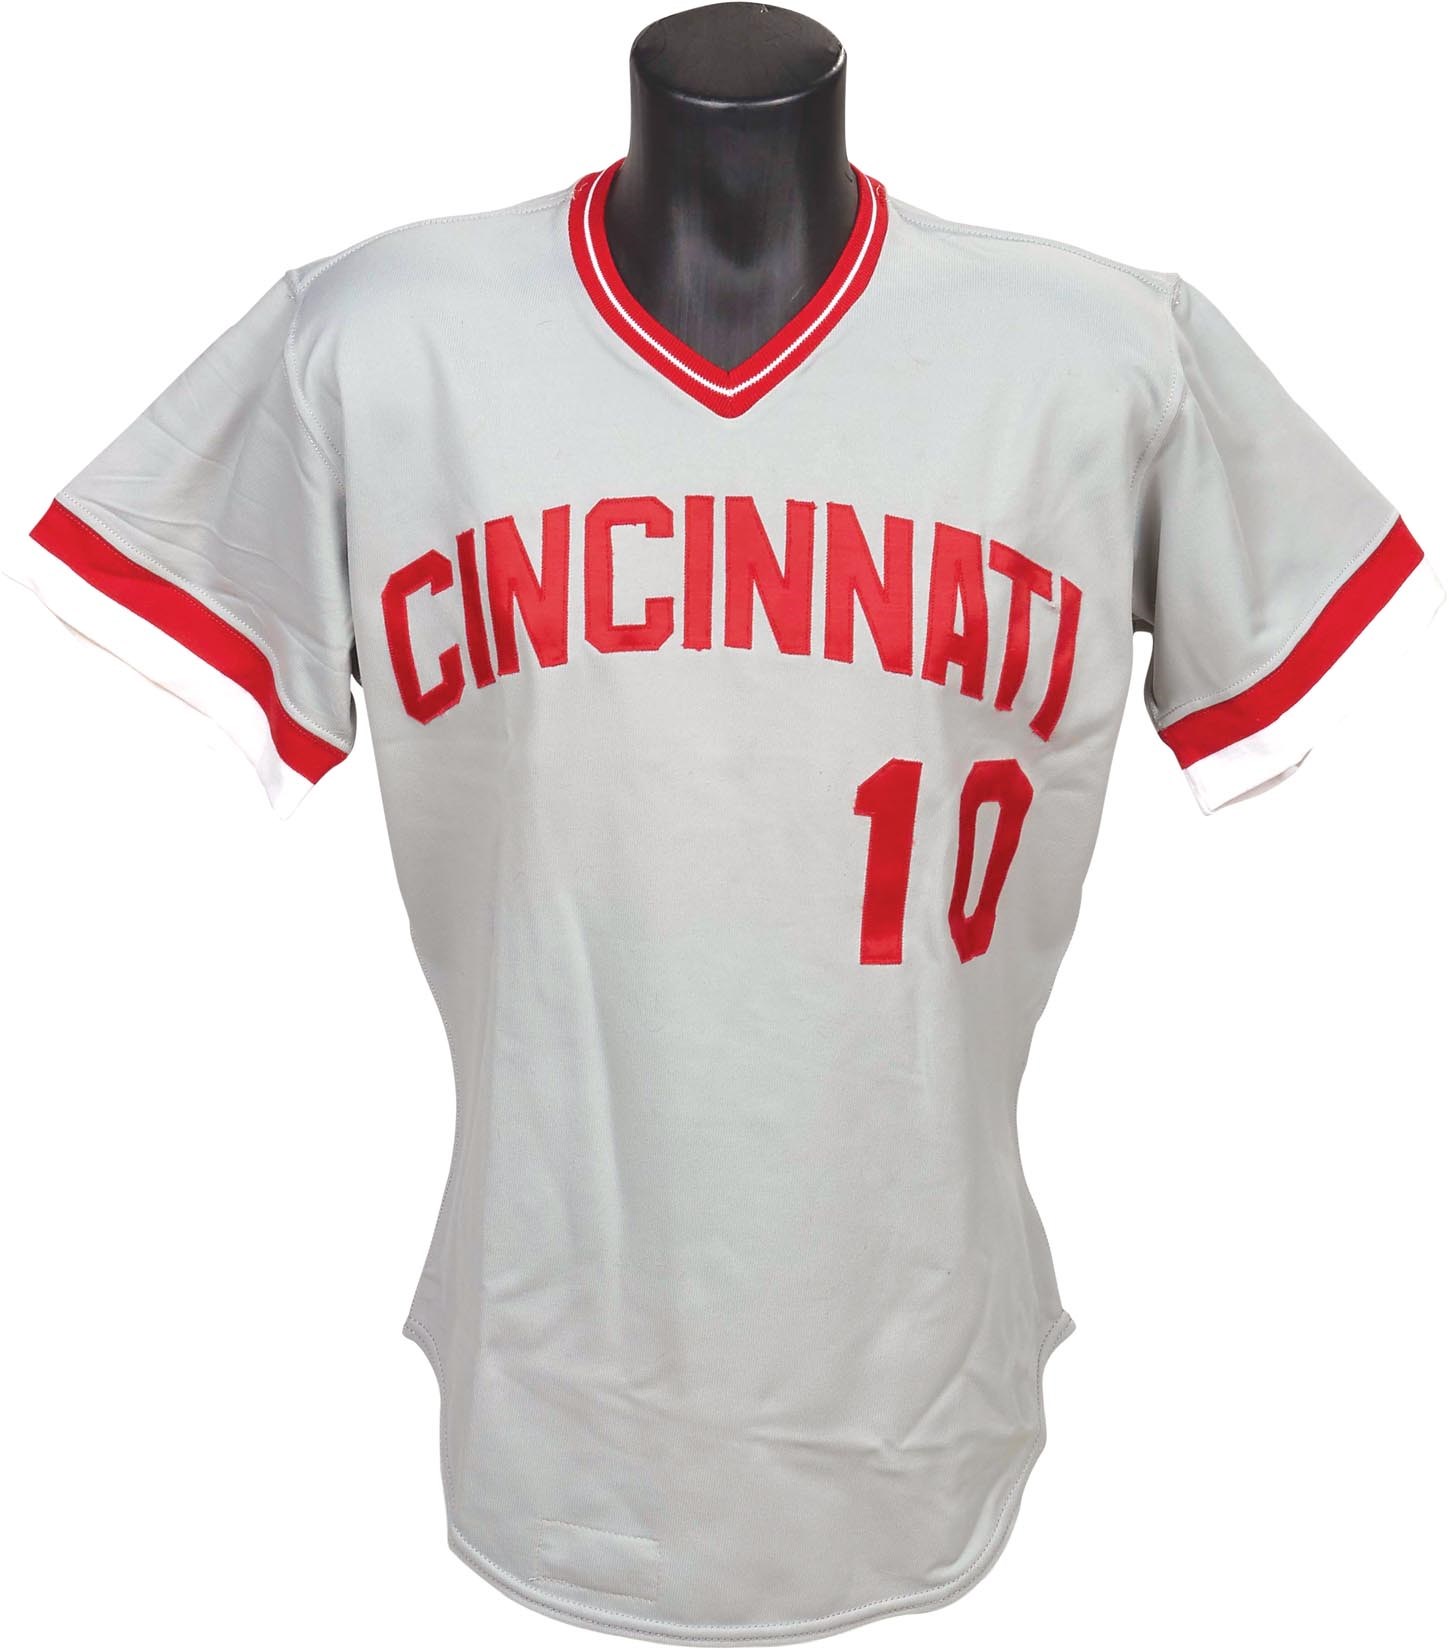 - 1978 Sparky Anderson Cincinnati Reds Tour of Japan Game Worn Uniform